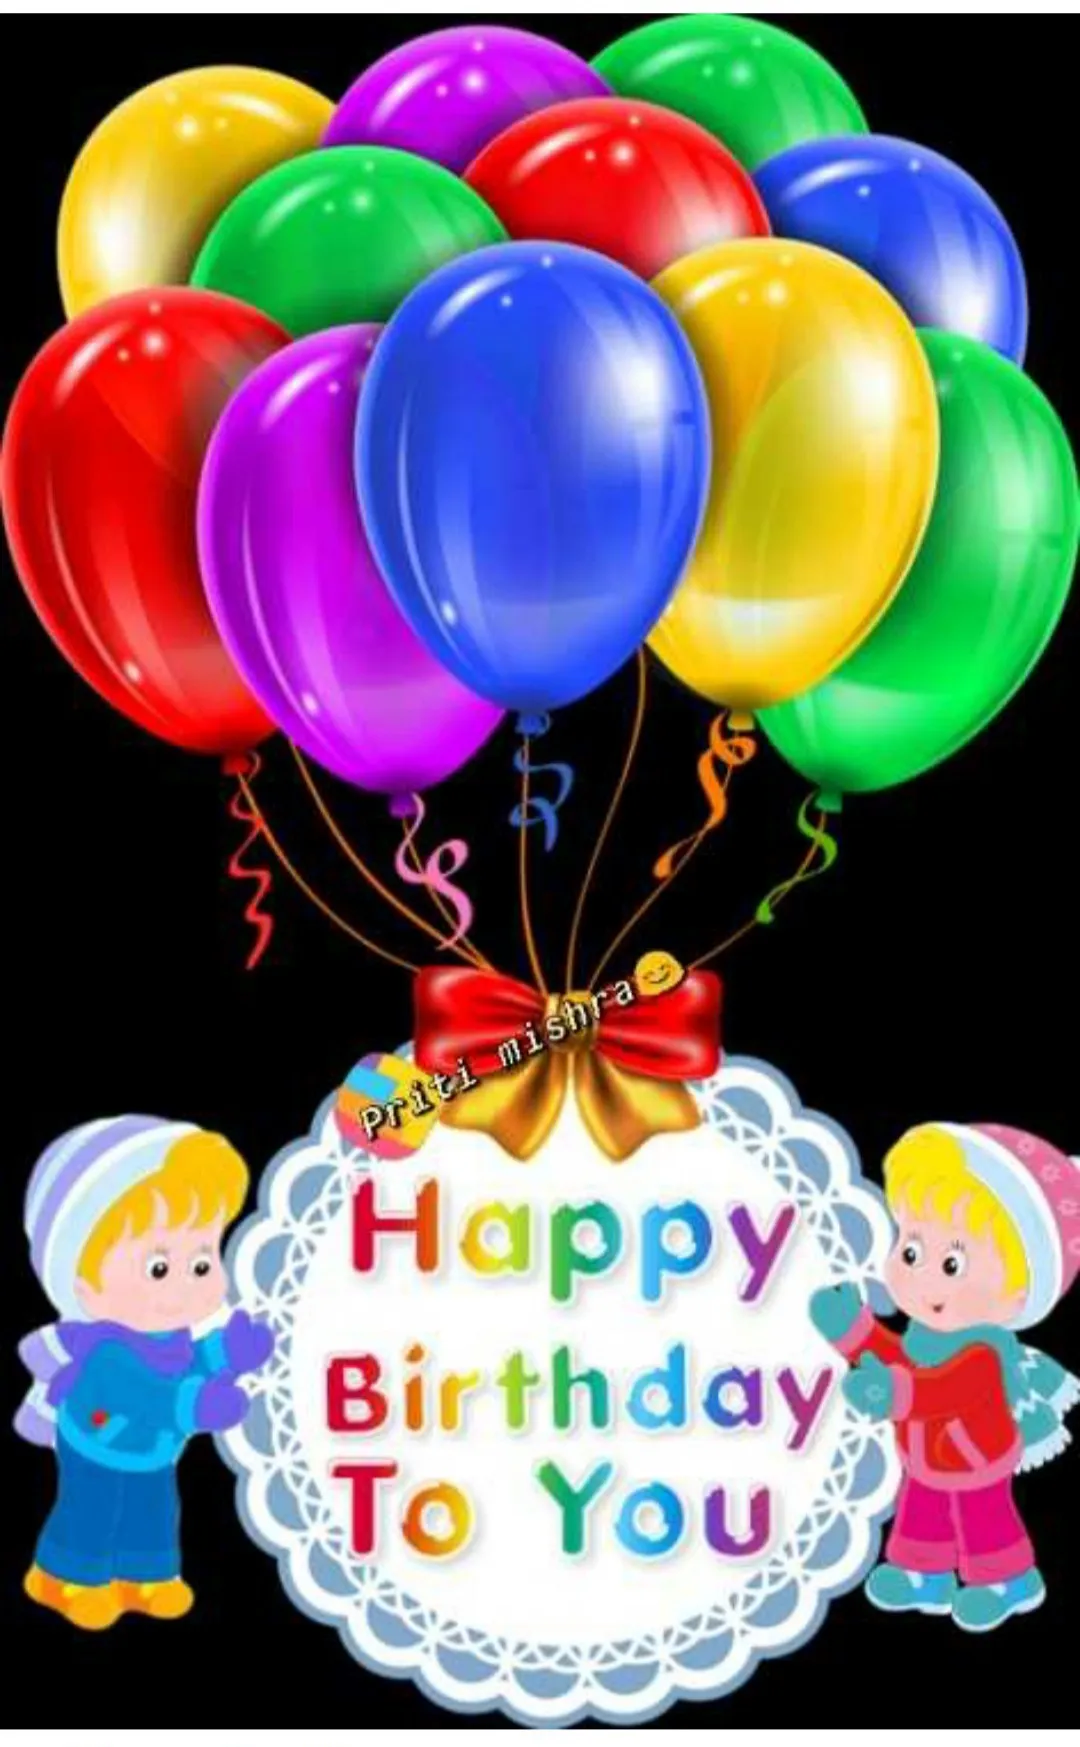 Happy birthday priti ❤️ - Jorhat Cake Lounge | Facebook